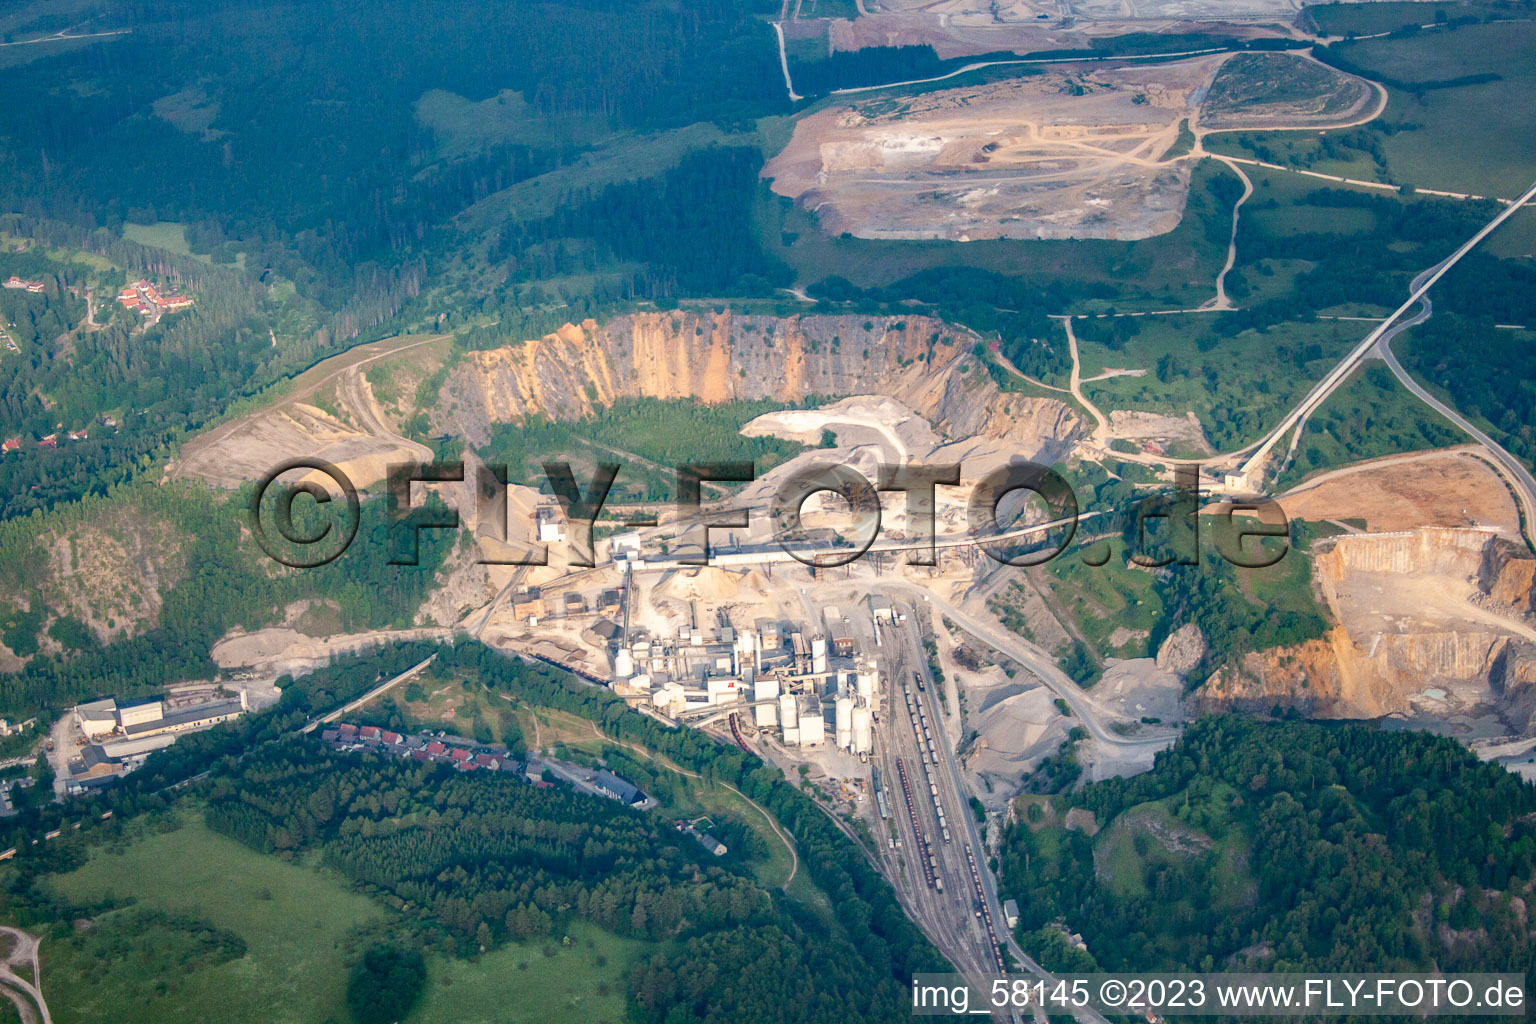 Aerial view of Site and Terrain of overburden surfaces Cement opencast mining Fels-Werke GmbH Kalkwerk Ruebeland in the district Ruebeland in Elbingerode (Harz) in the state Saxony-Anhalt, Germany